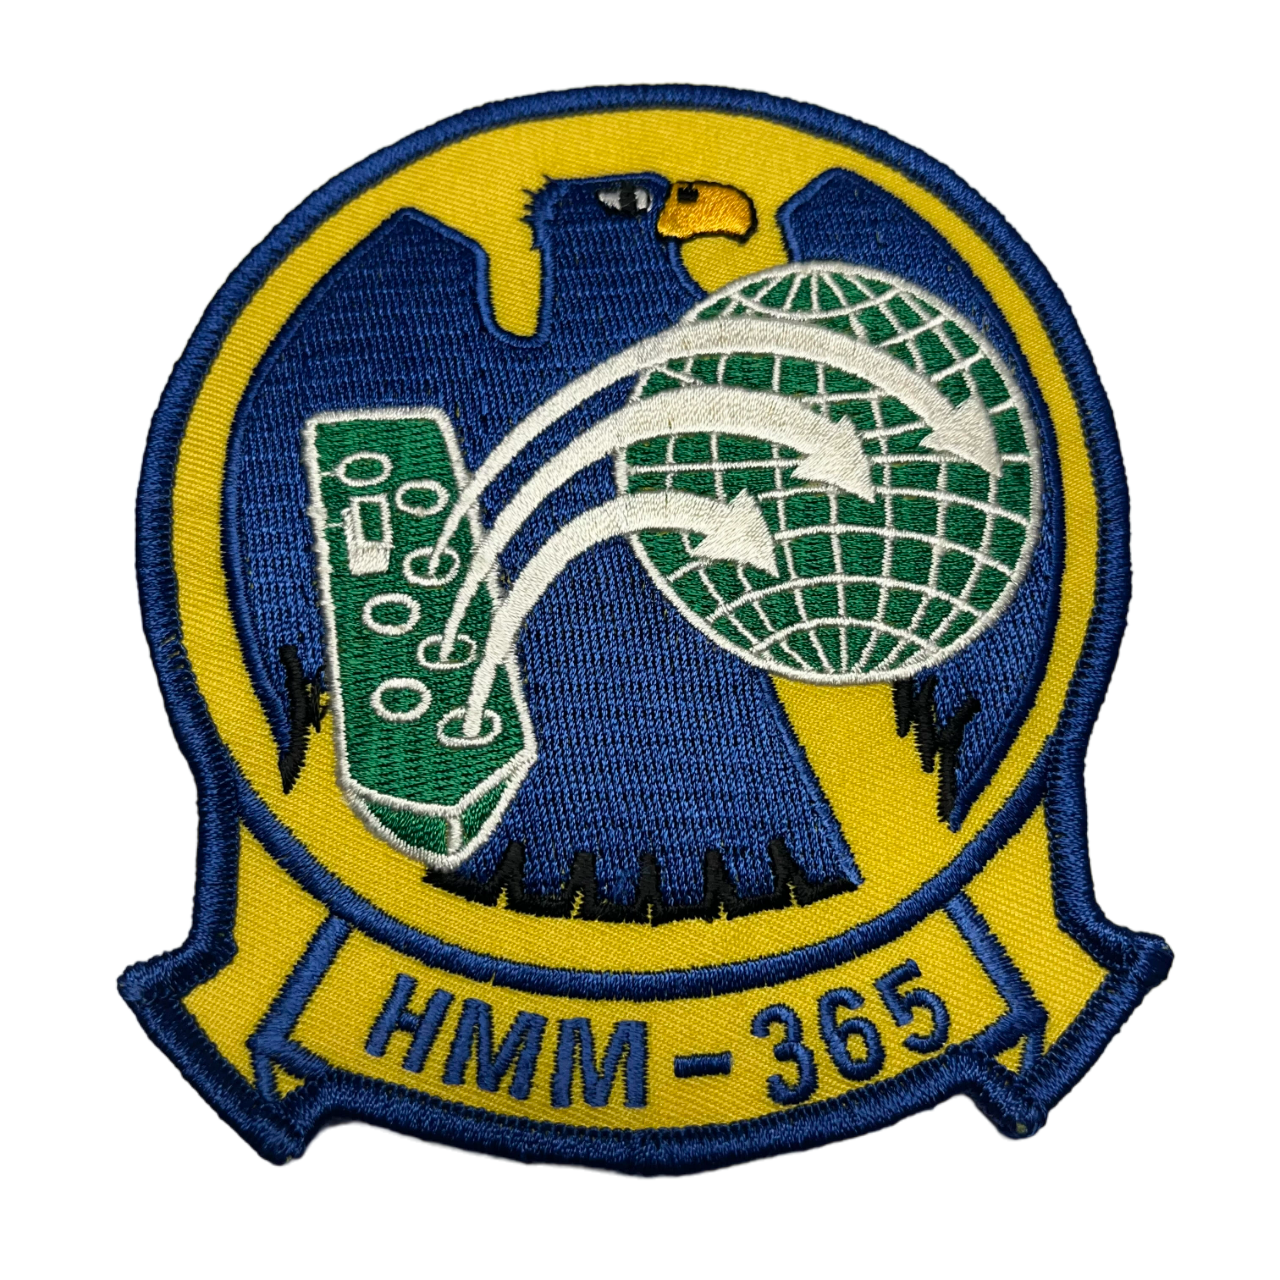 HMM-365 - Sew-On Patch